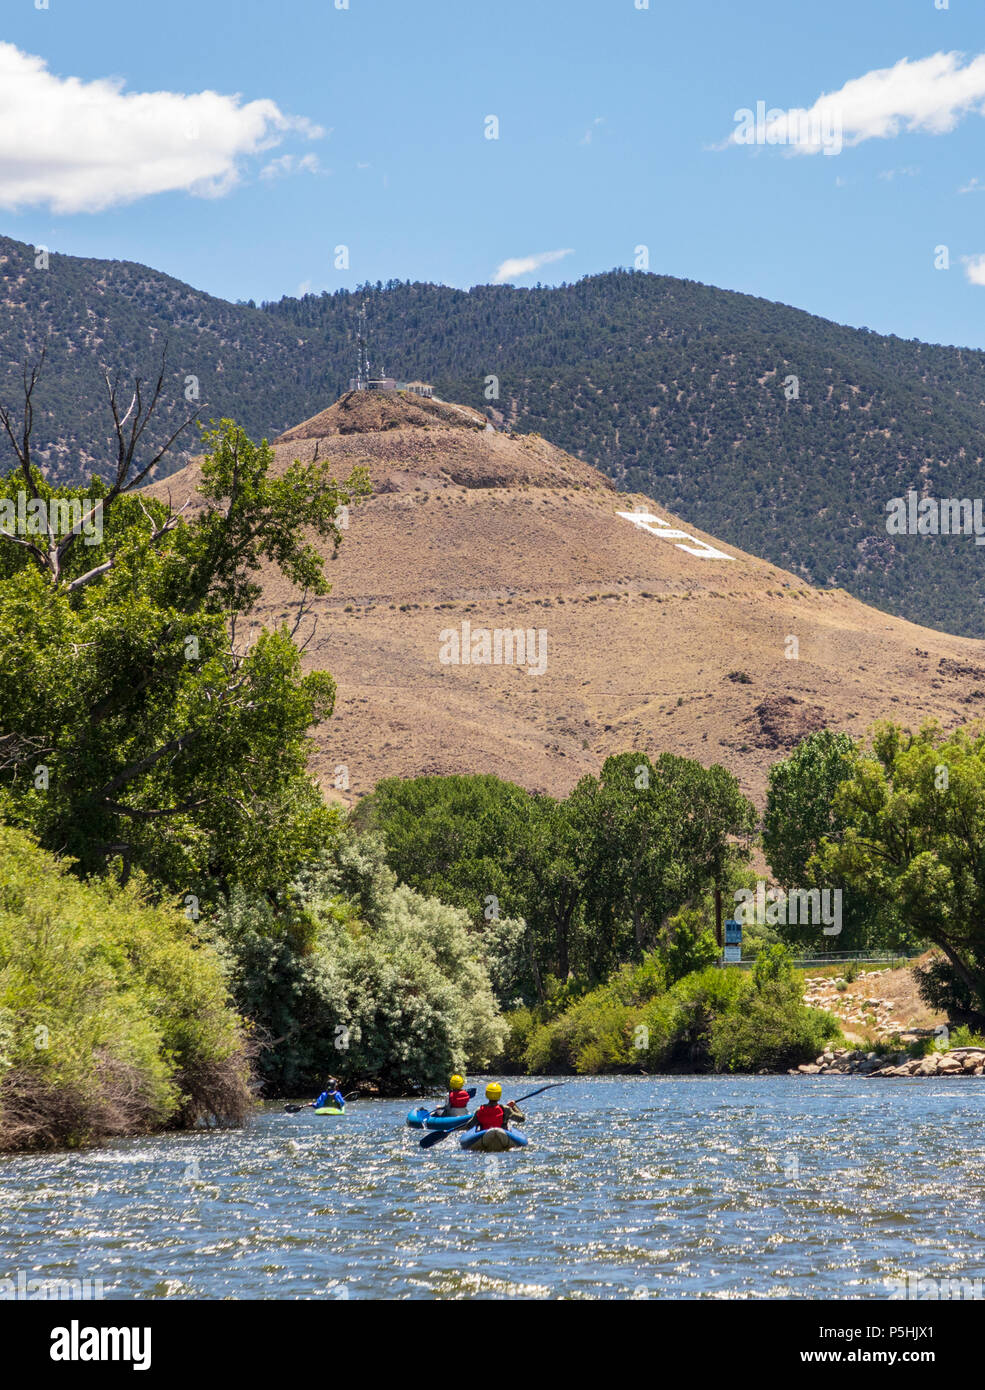 Inflatable kayaks, rubber duckies, Arkansas River, Salida, Colorado, USA Stock Photo